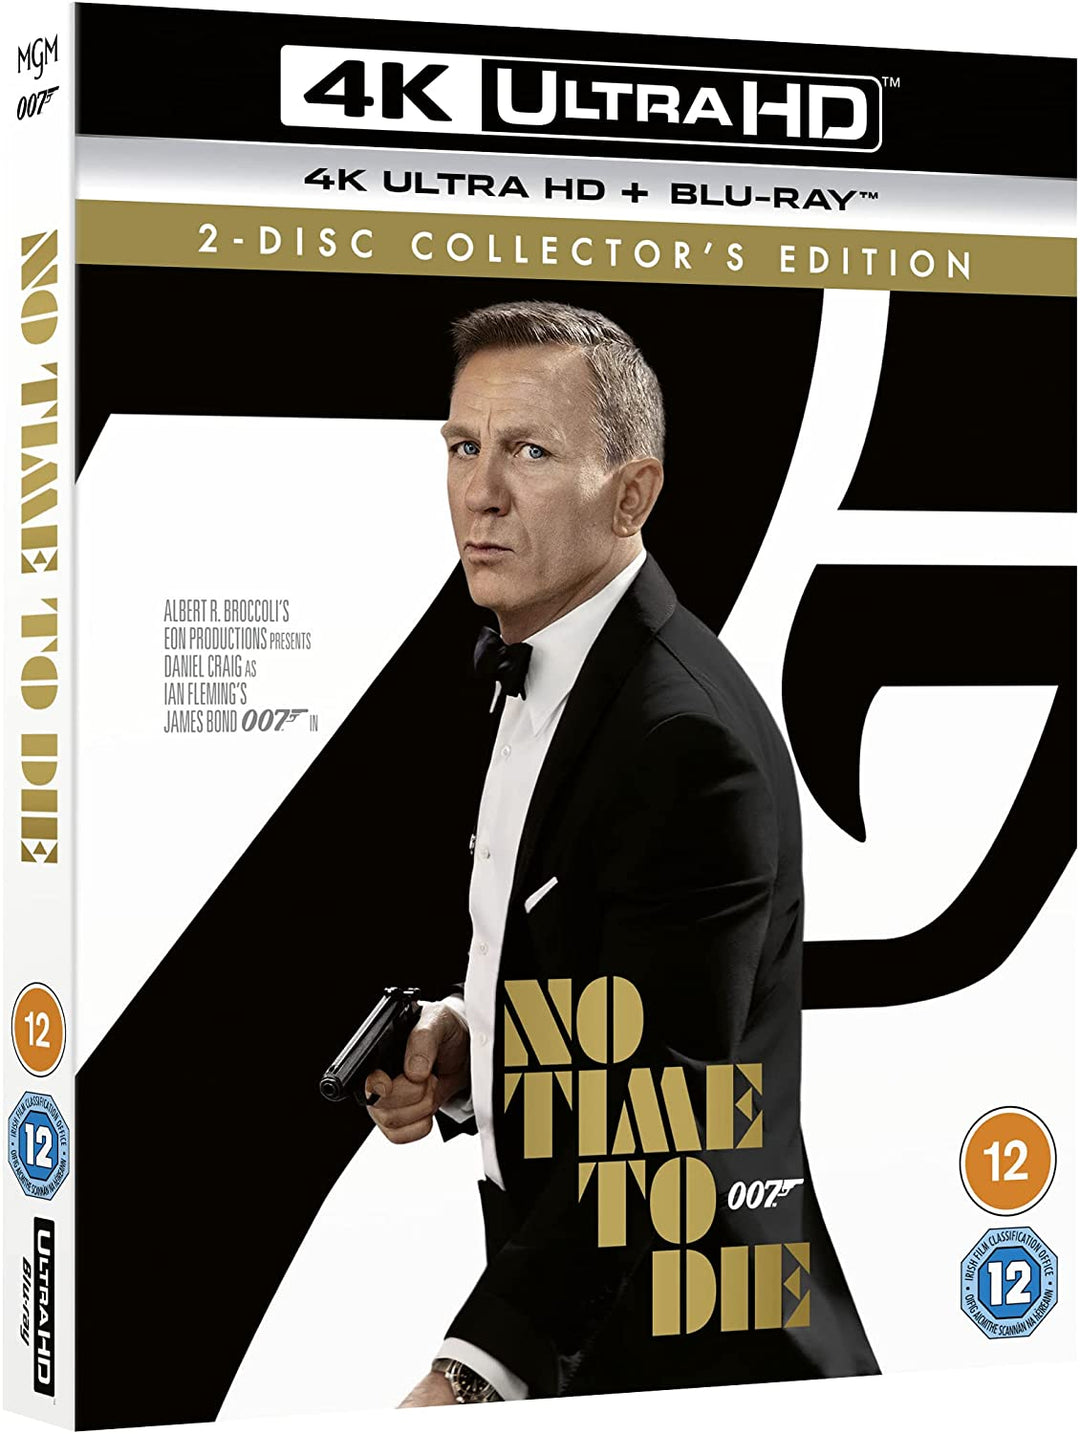 No Time To Die (James Bond) [4K Ultra HD] [2021] [Region Free] - Action/Adventure [Blu-ray]